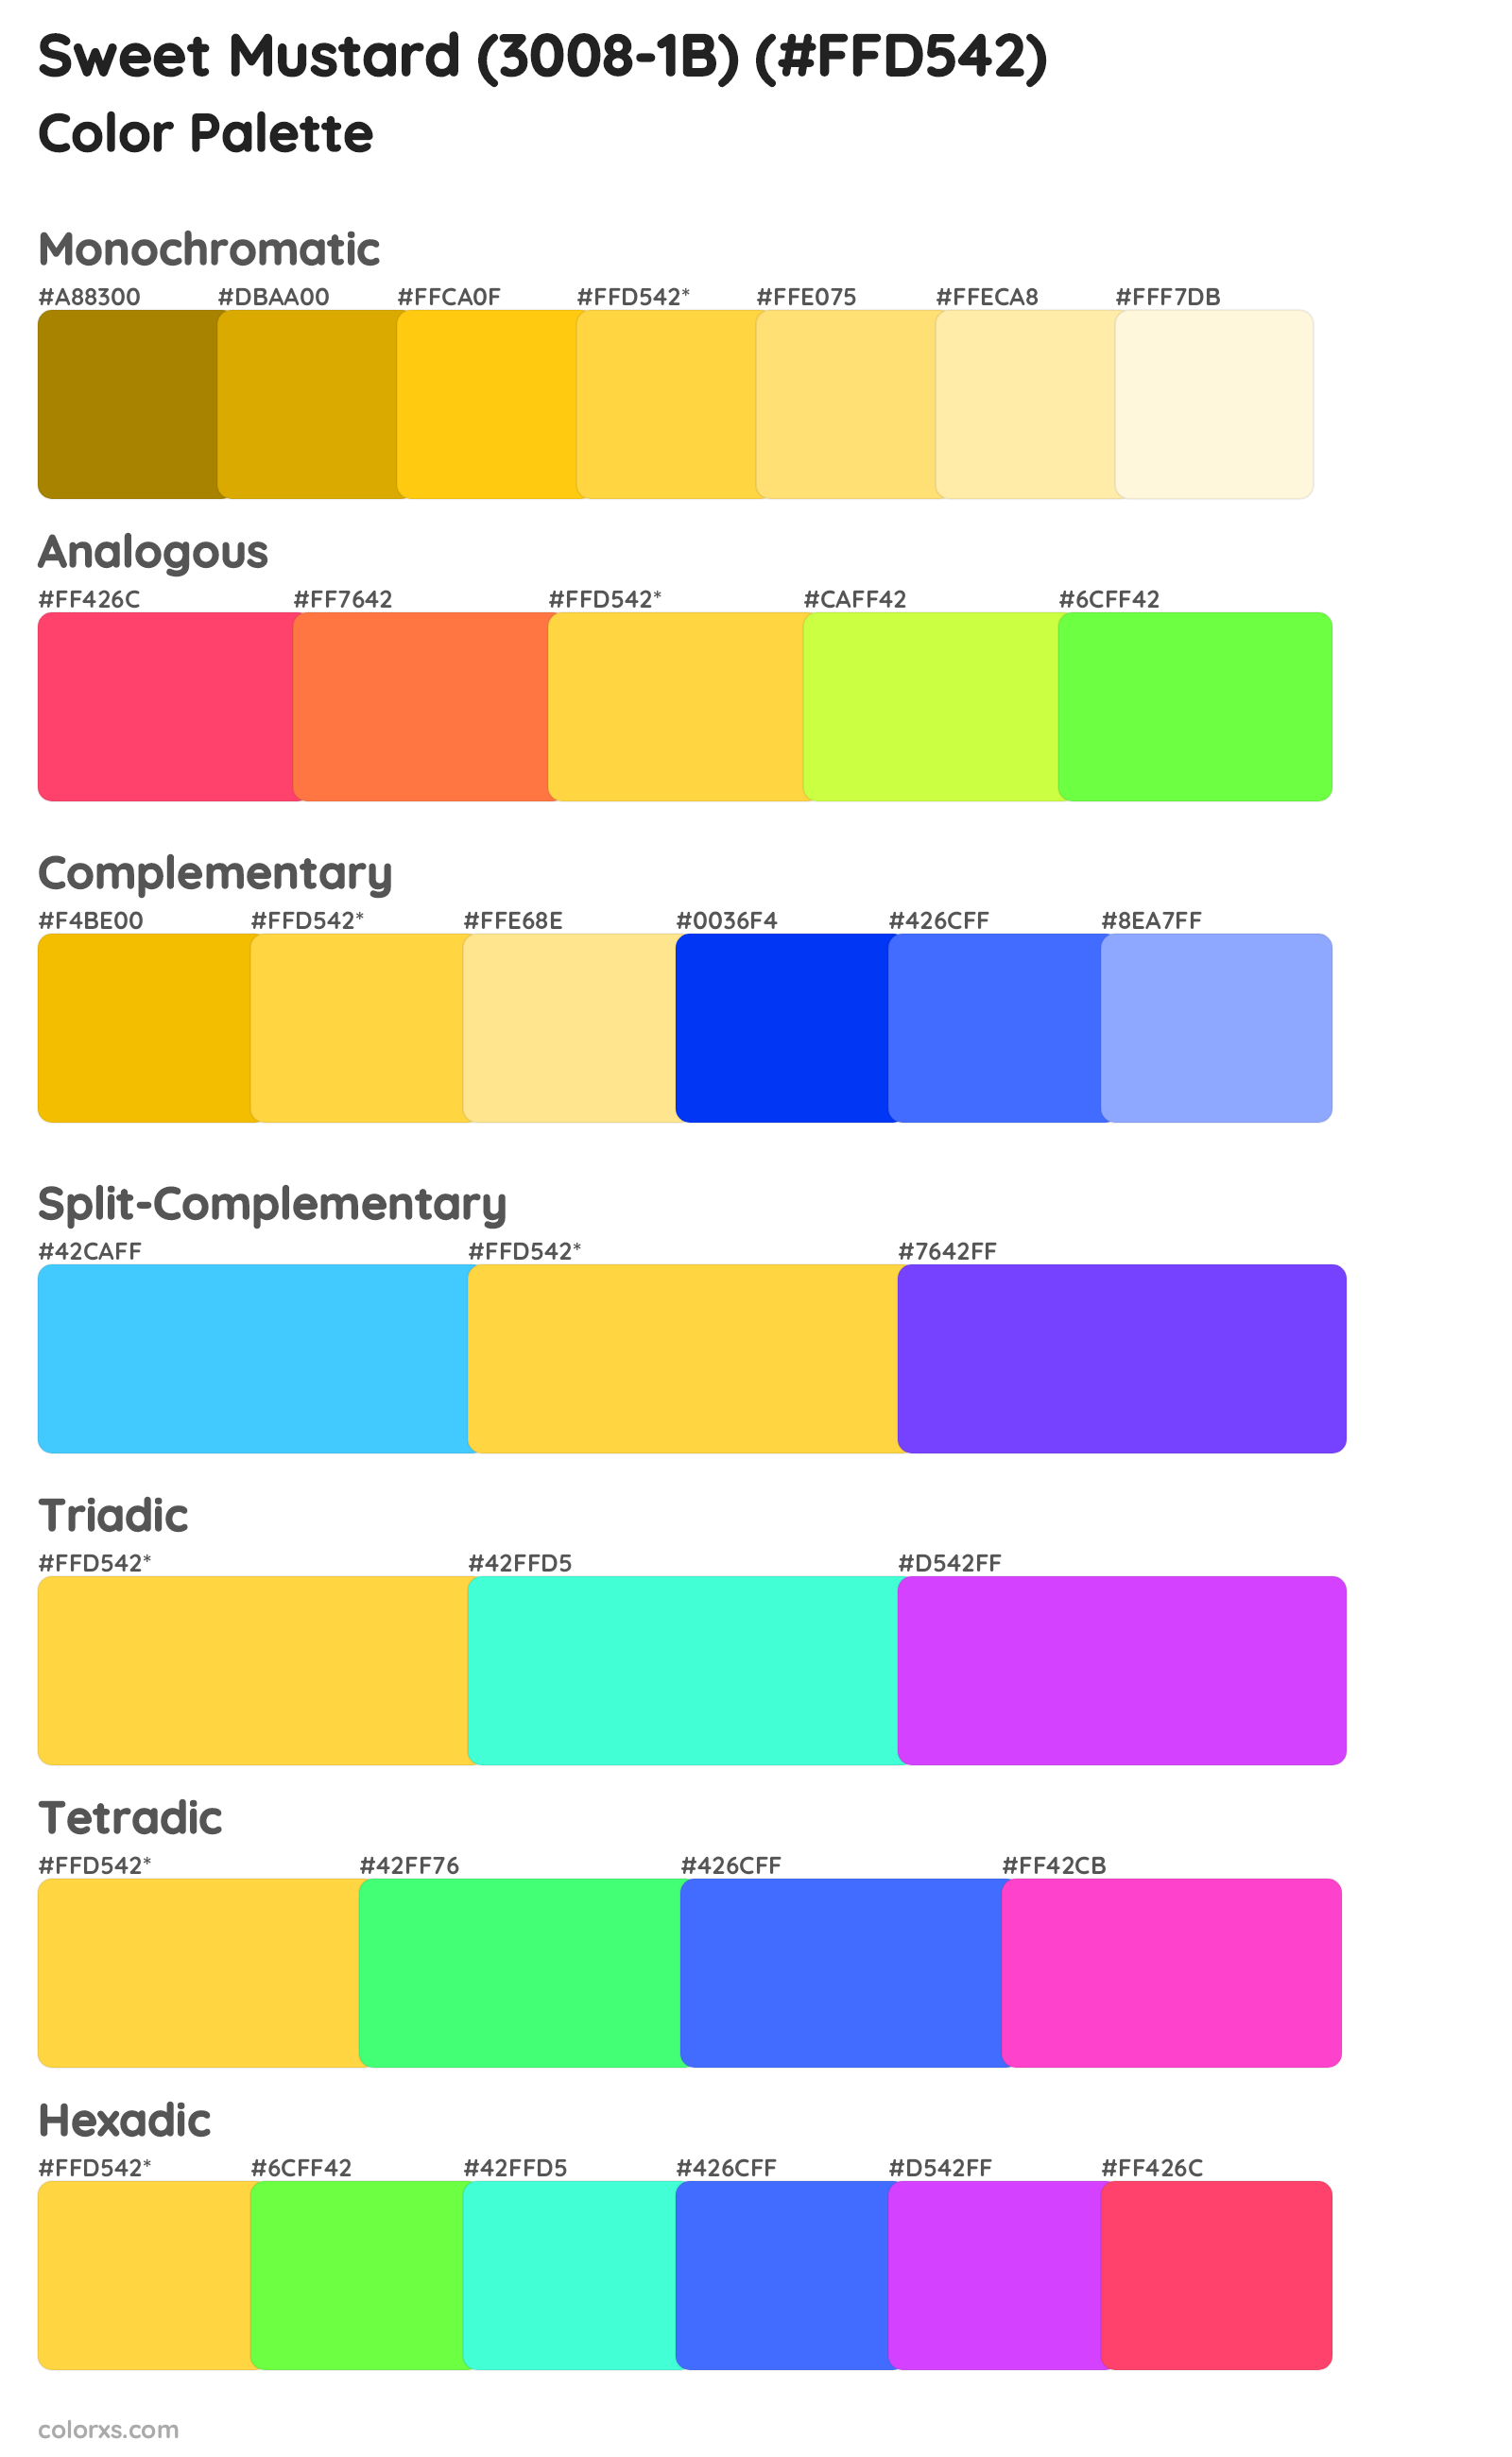 Sweet Mustard (3008-1B) Color Scheme Palettes